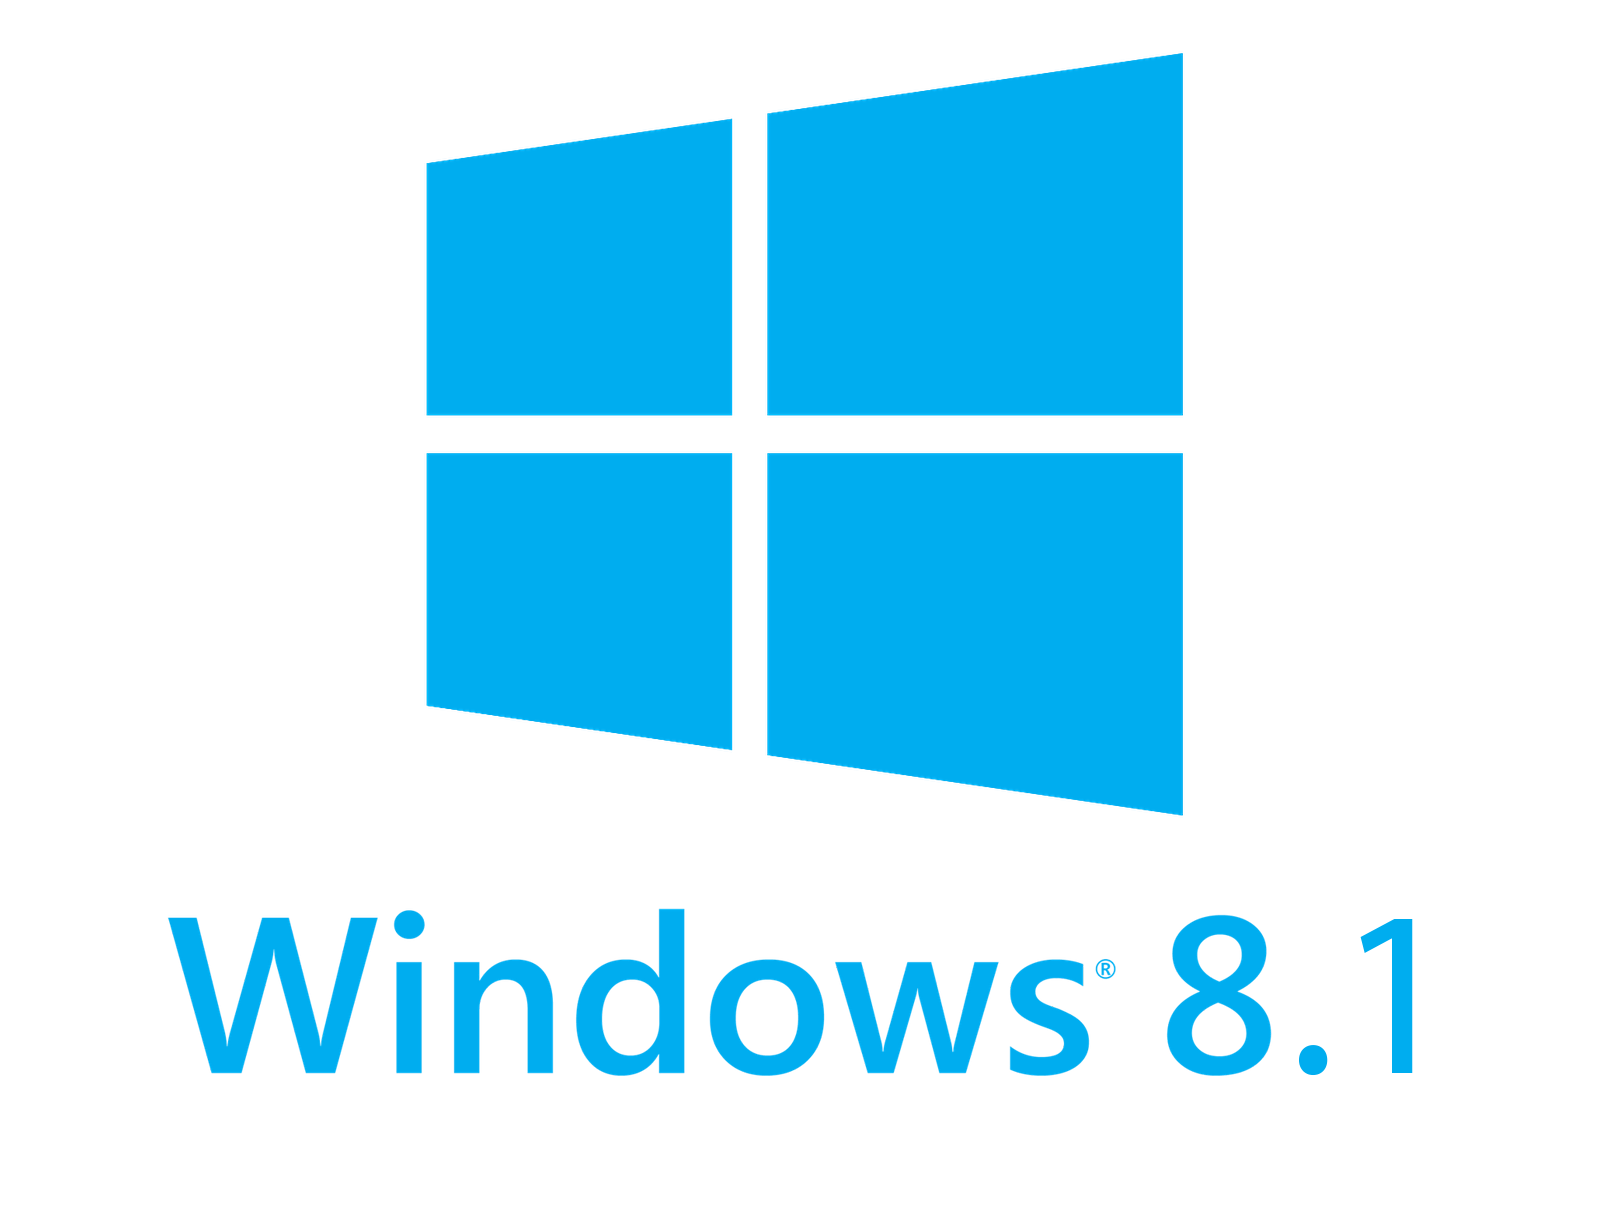 Windows 8 Logo - Windows 8.1 Logo.AMREL.com